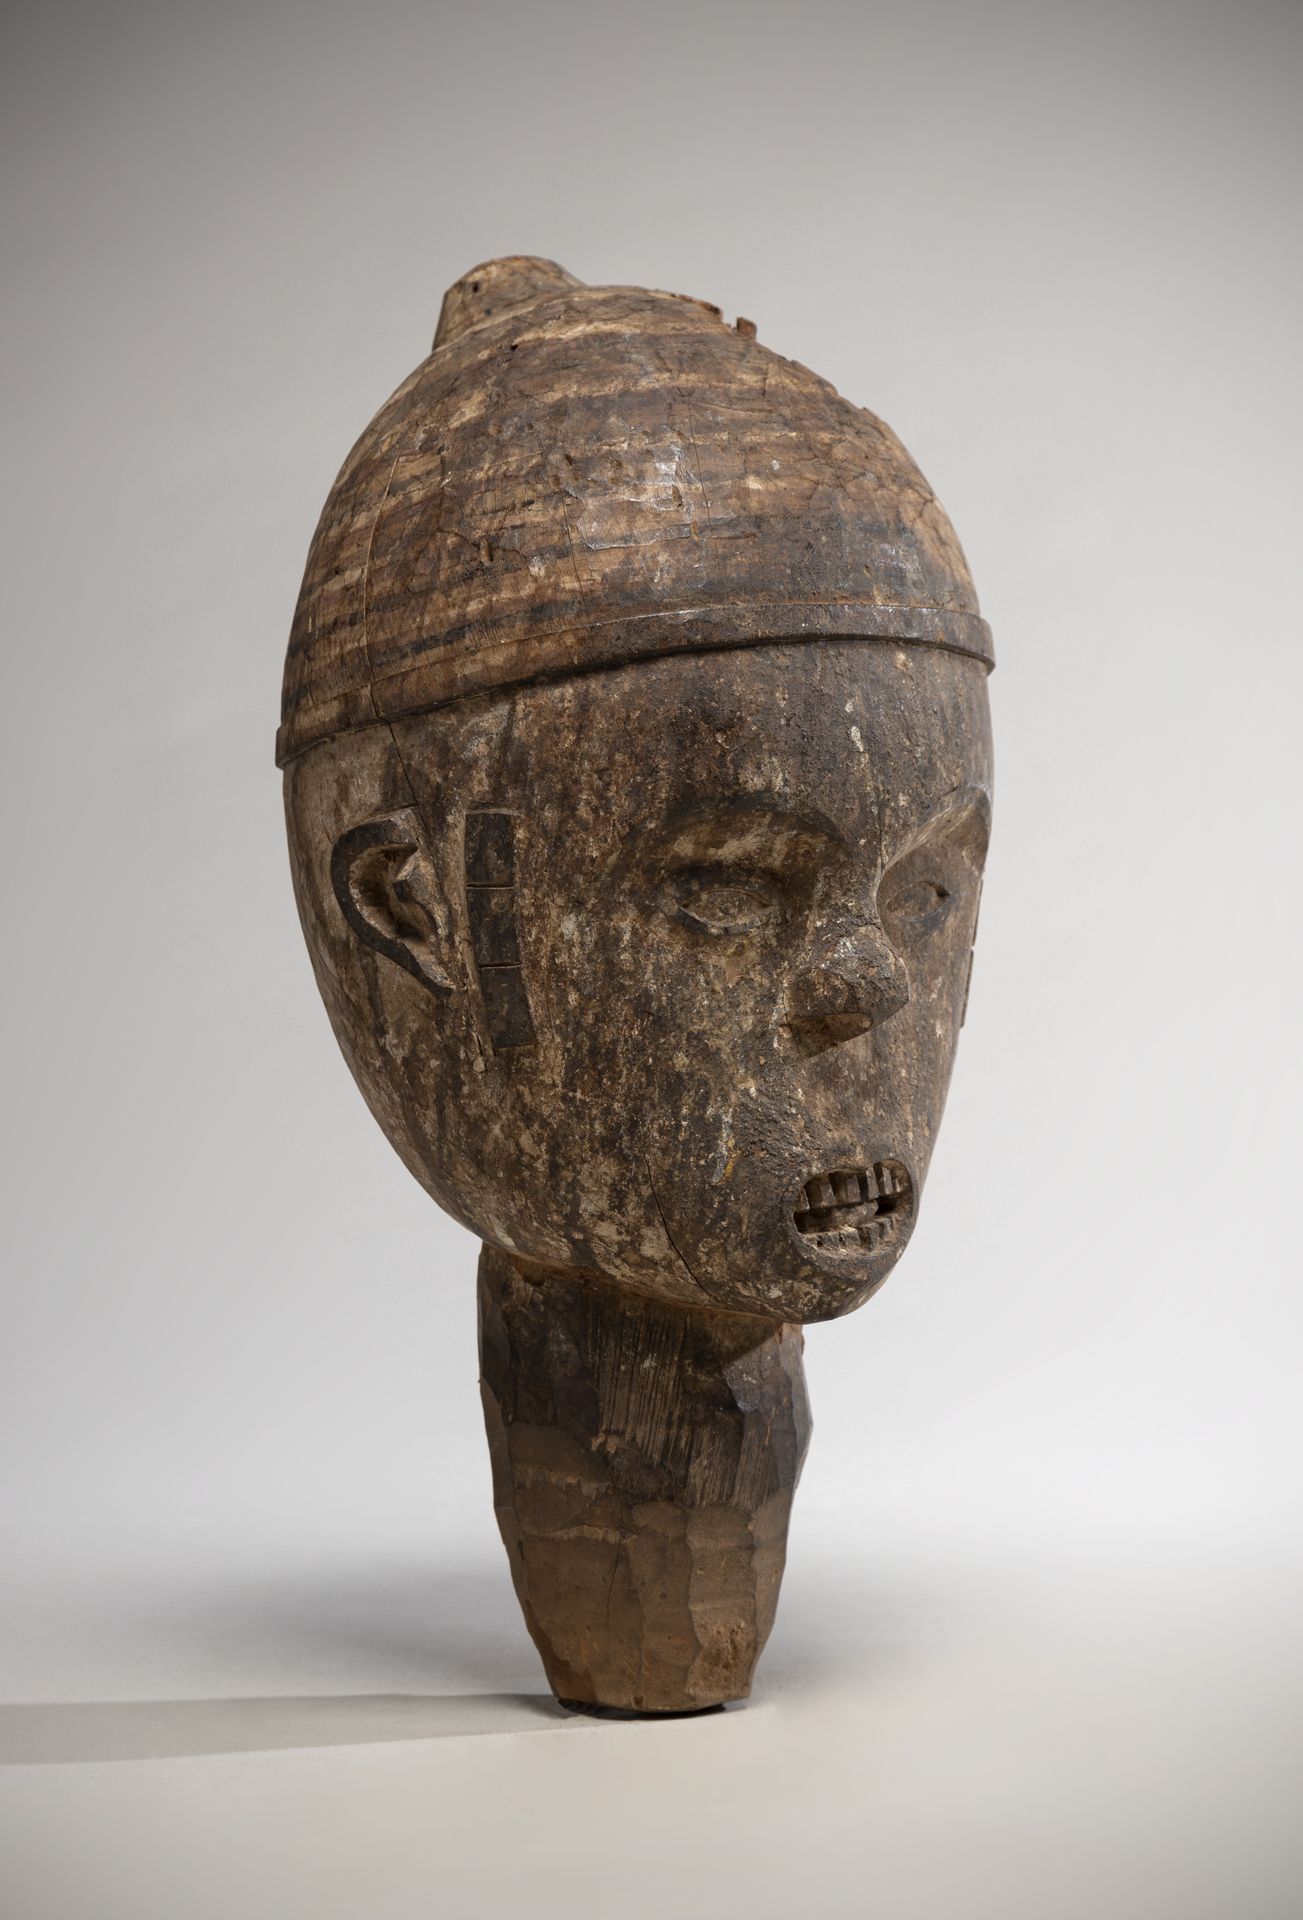 Null IDOMA /IZZI (Nigeria)

Importante cabeza de madera pesada antiguamente recu&hellip;